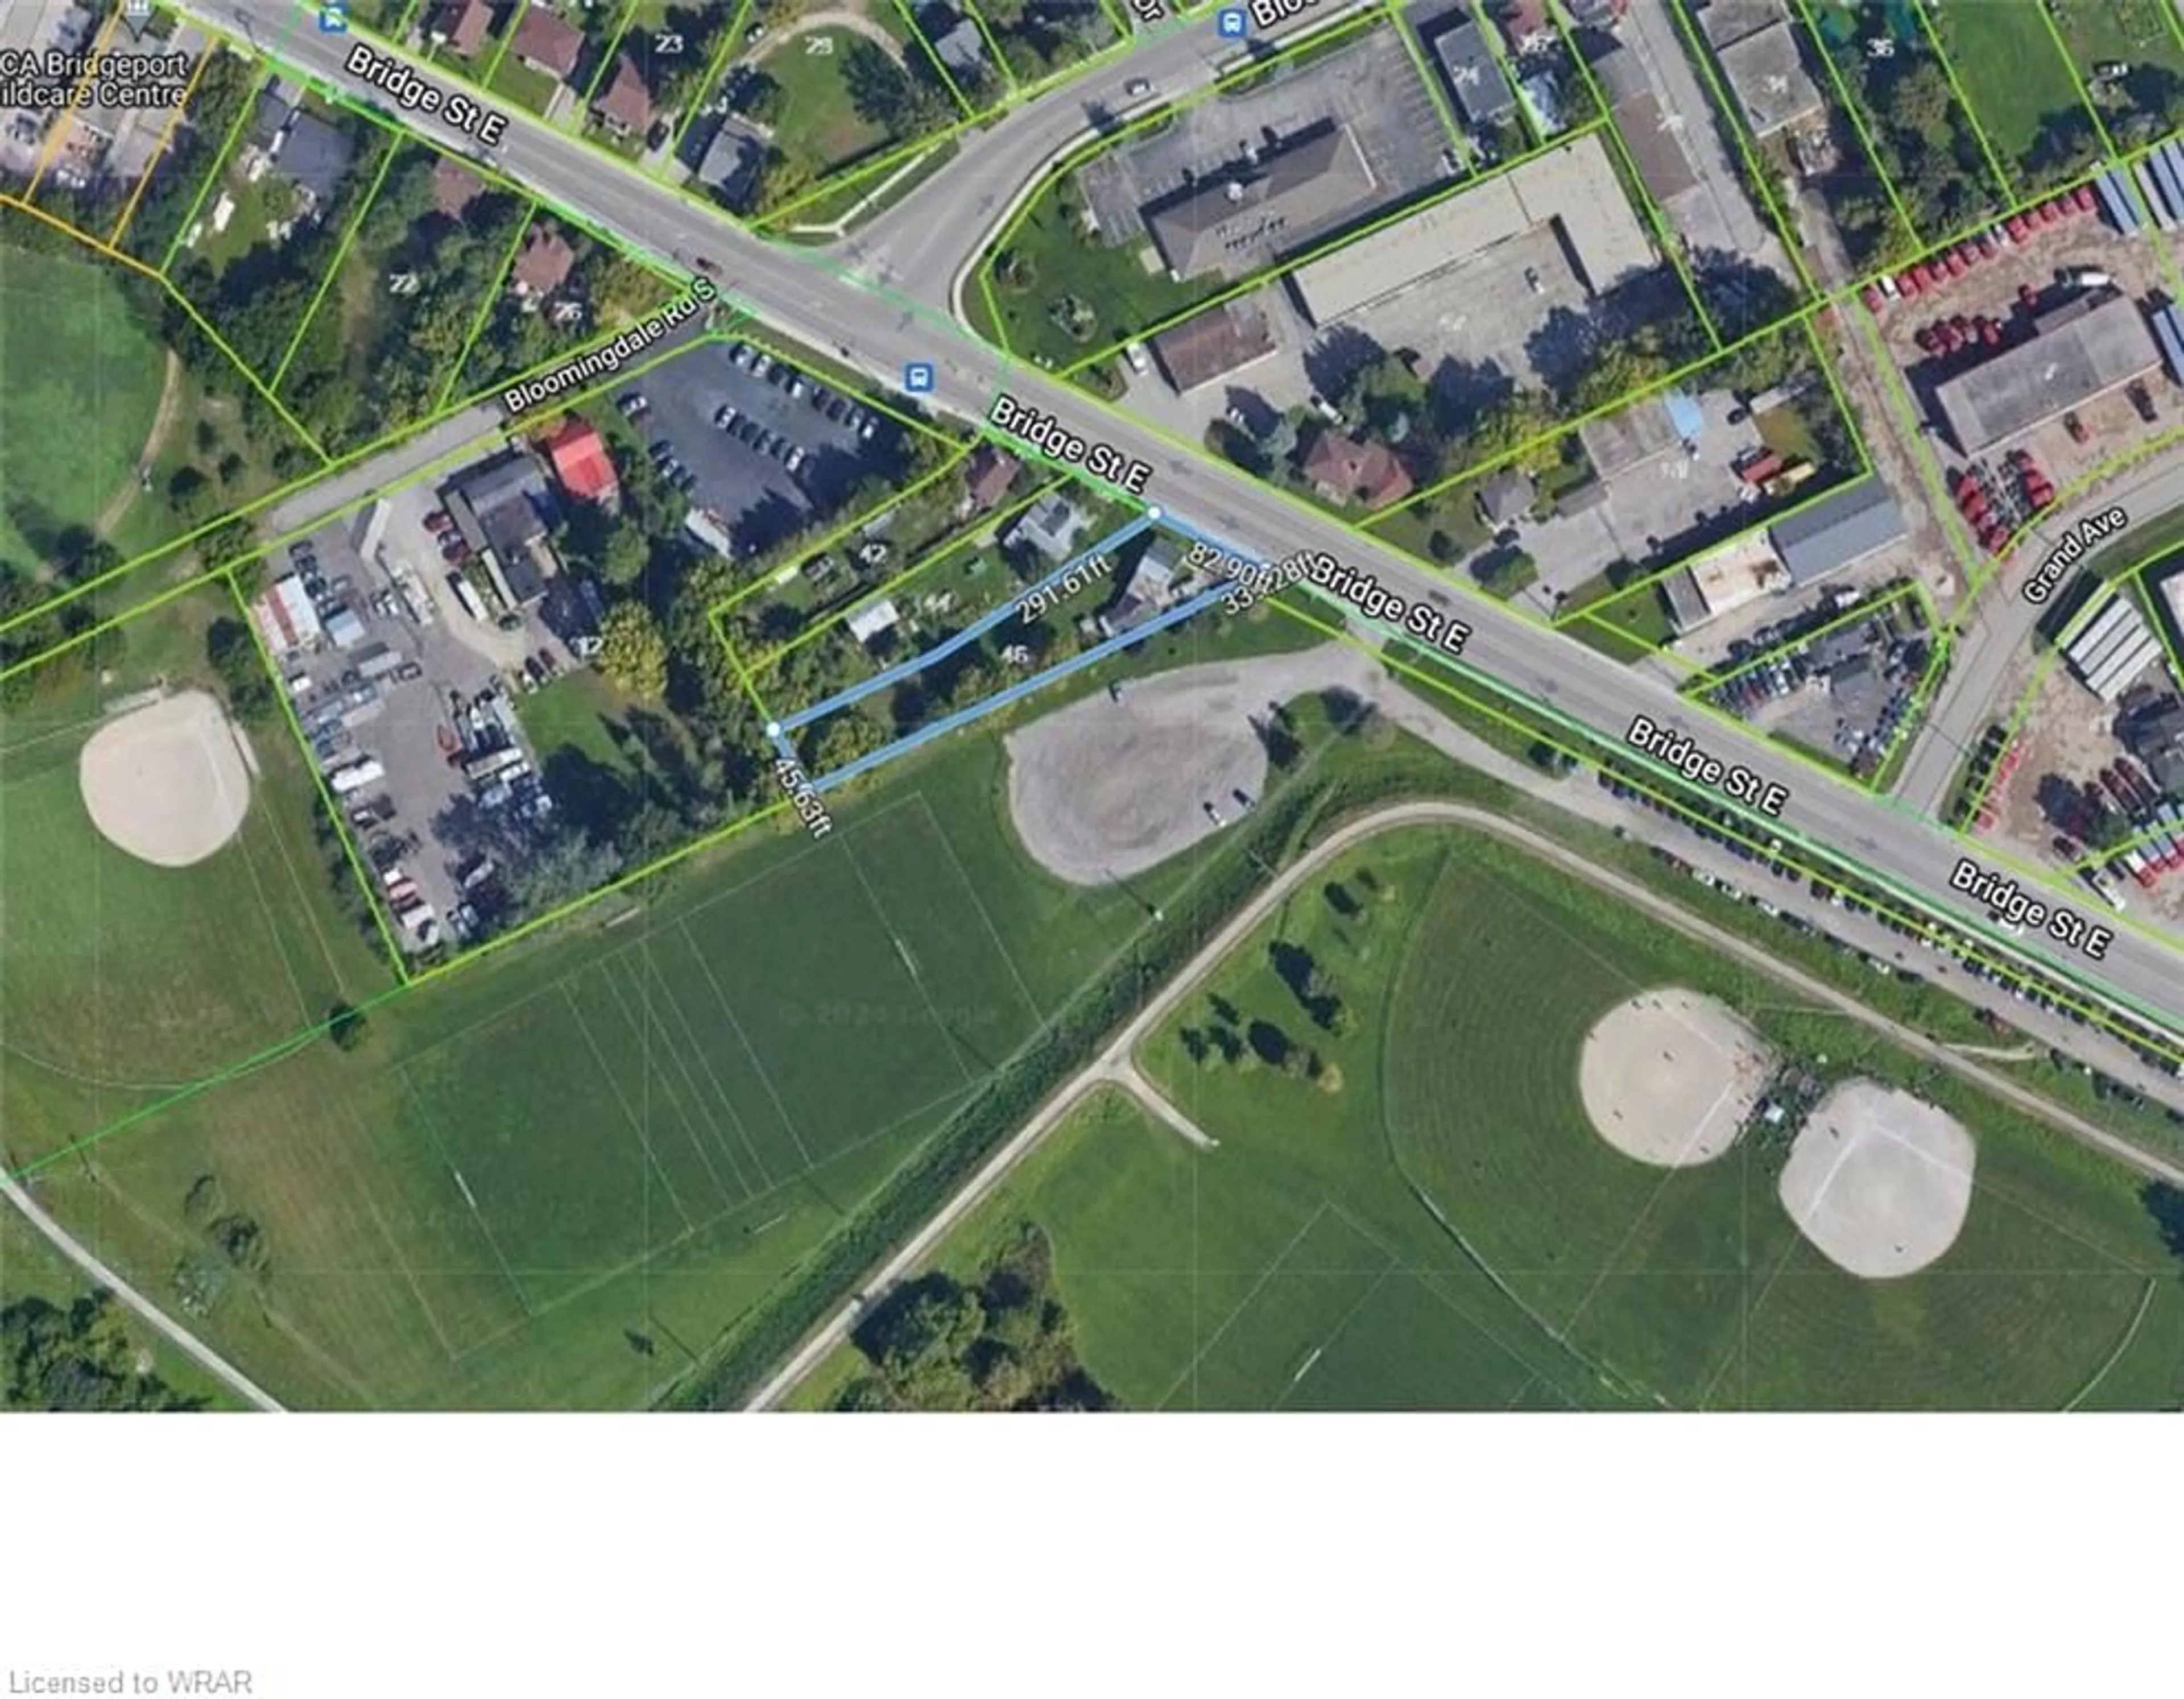 Street view for 46 Bridge St, Kitchener Ontario N2K 1J6